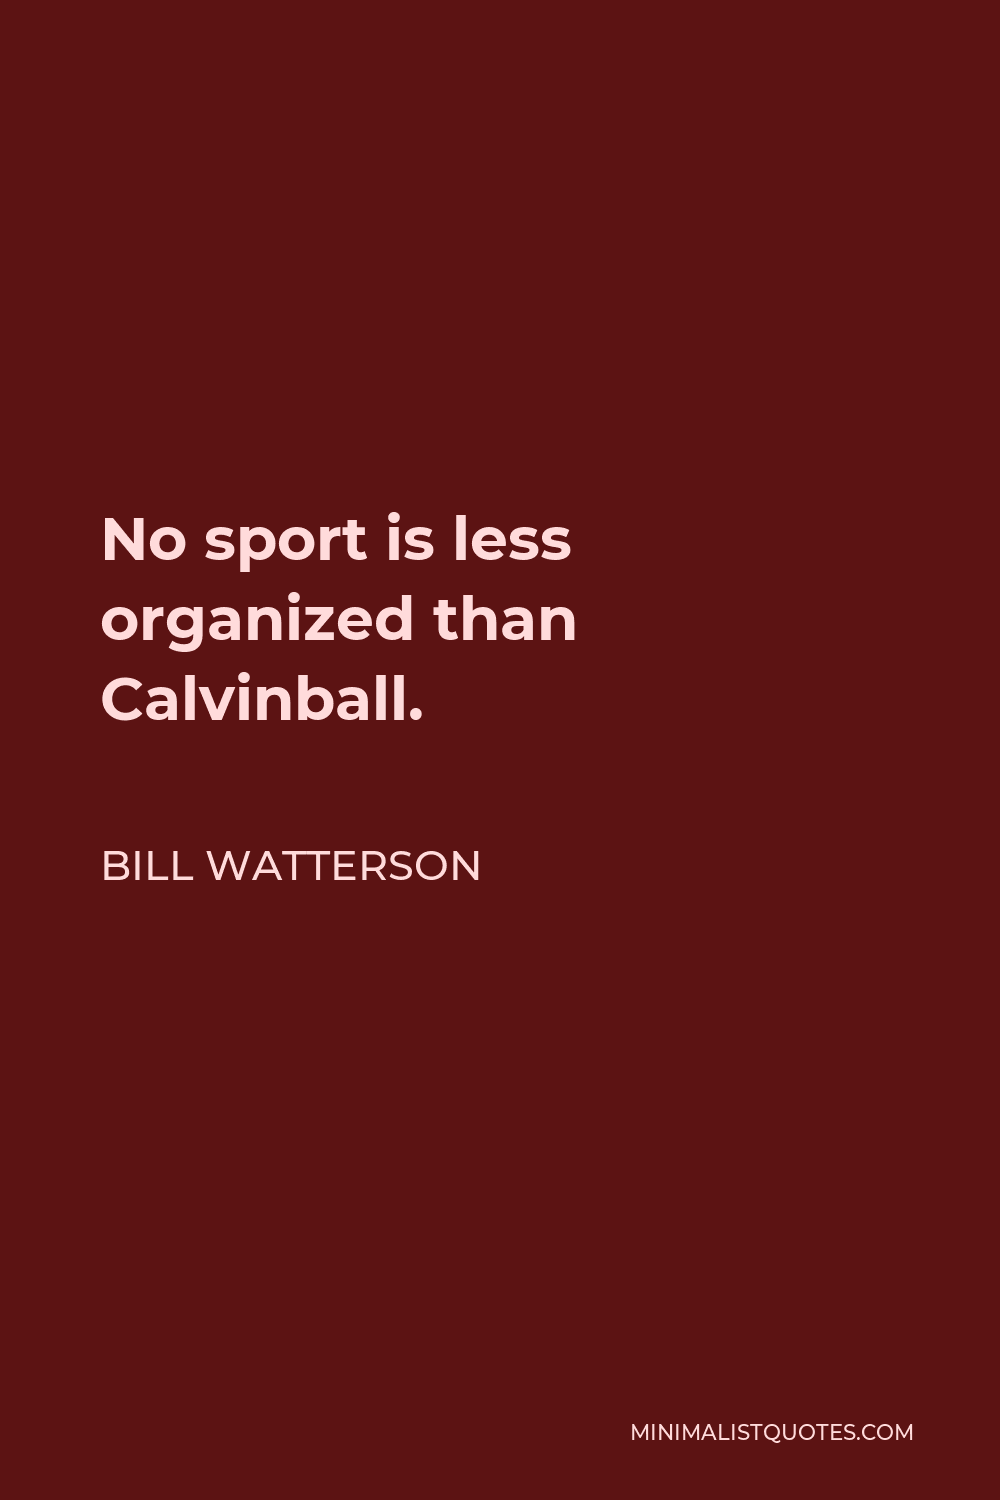 Bill Watterson Quote - No sport is less organized than Calvinball.